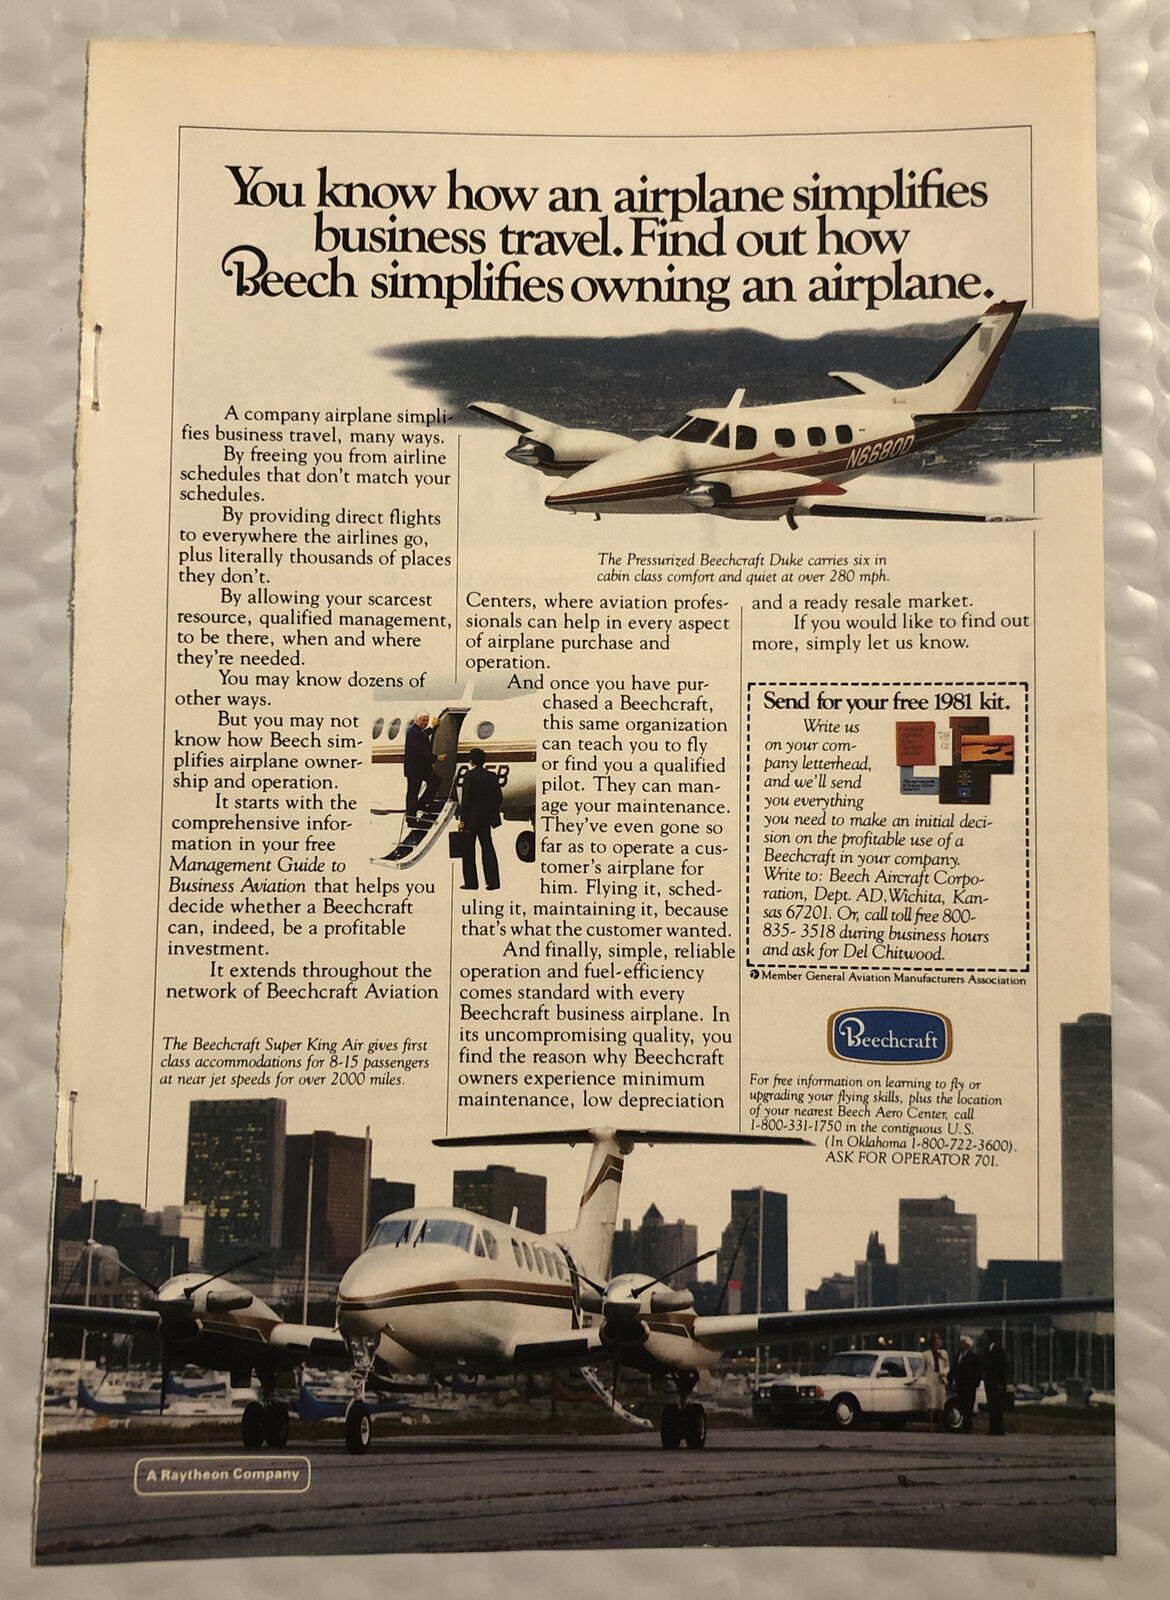 Vintage 1982 Beechcraft Original Full Page Print Ad - Simplifies Business Travel